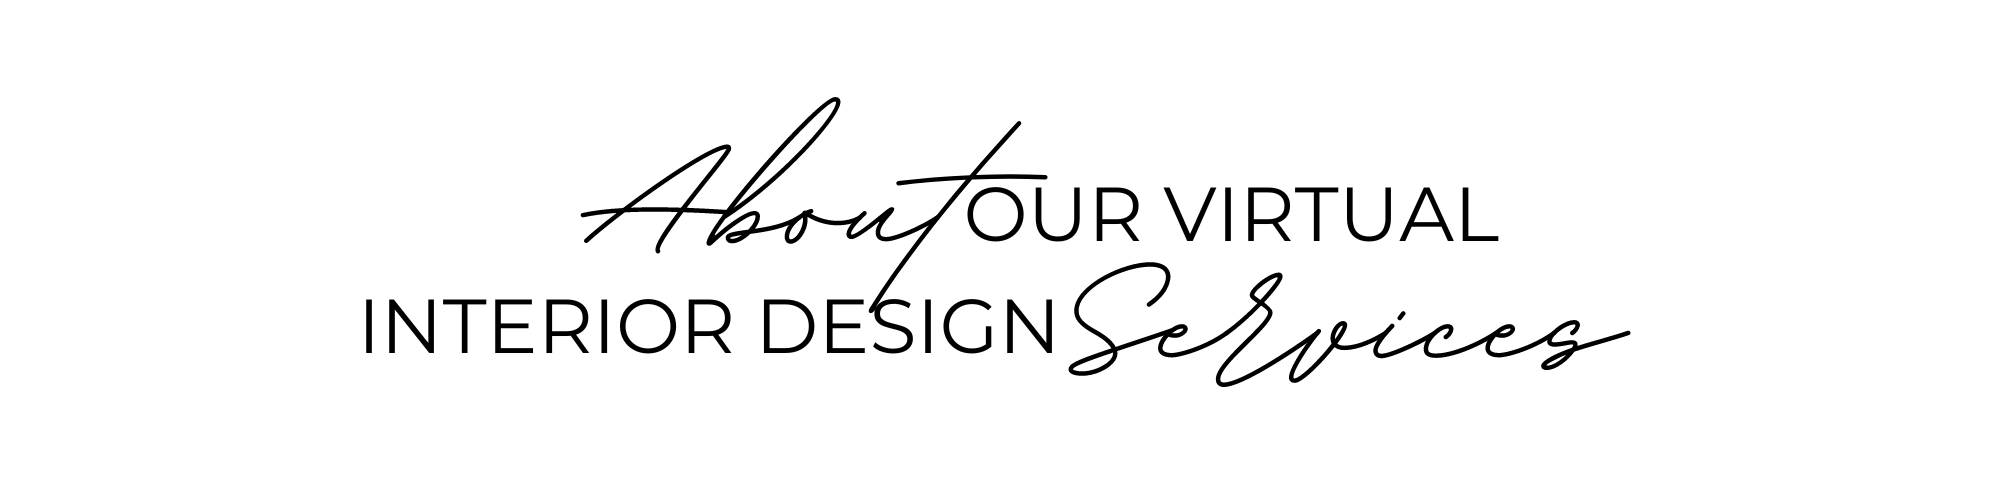 virtual interior design services